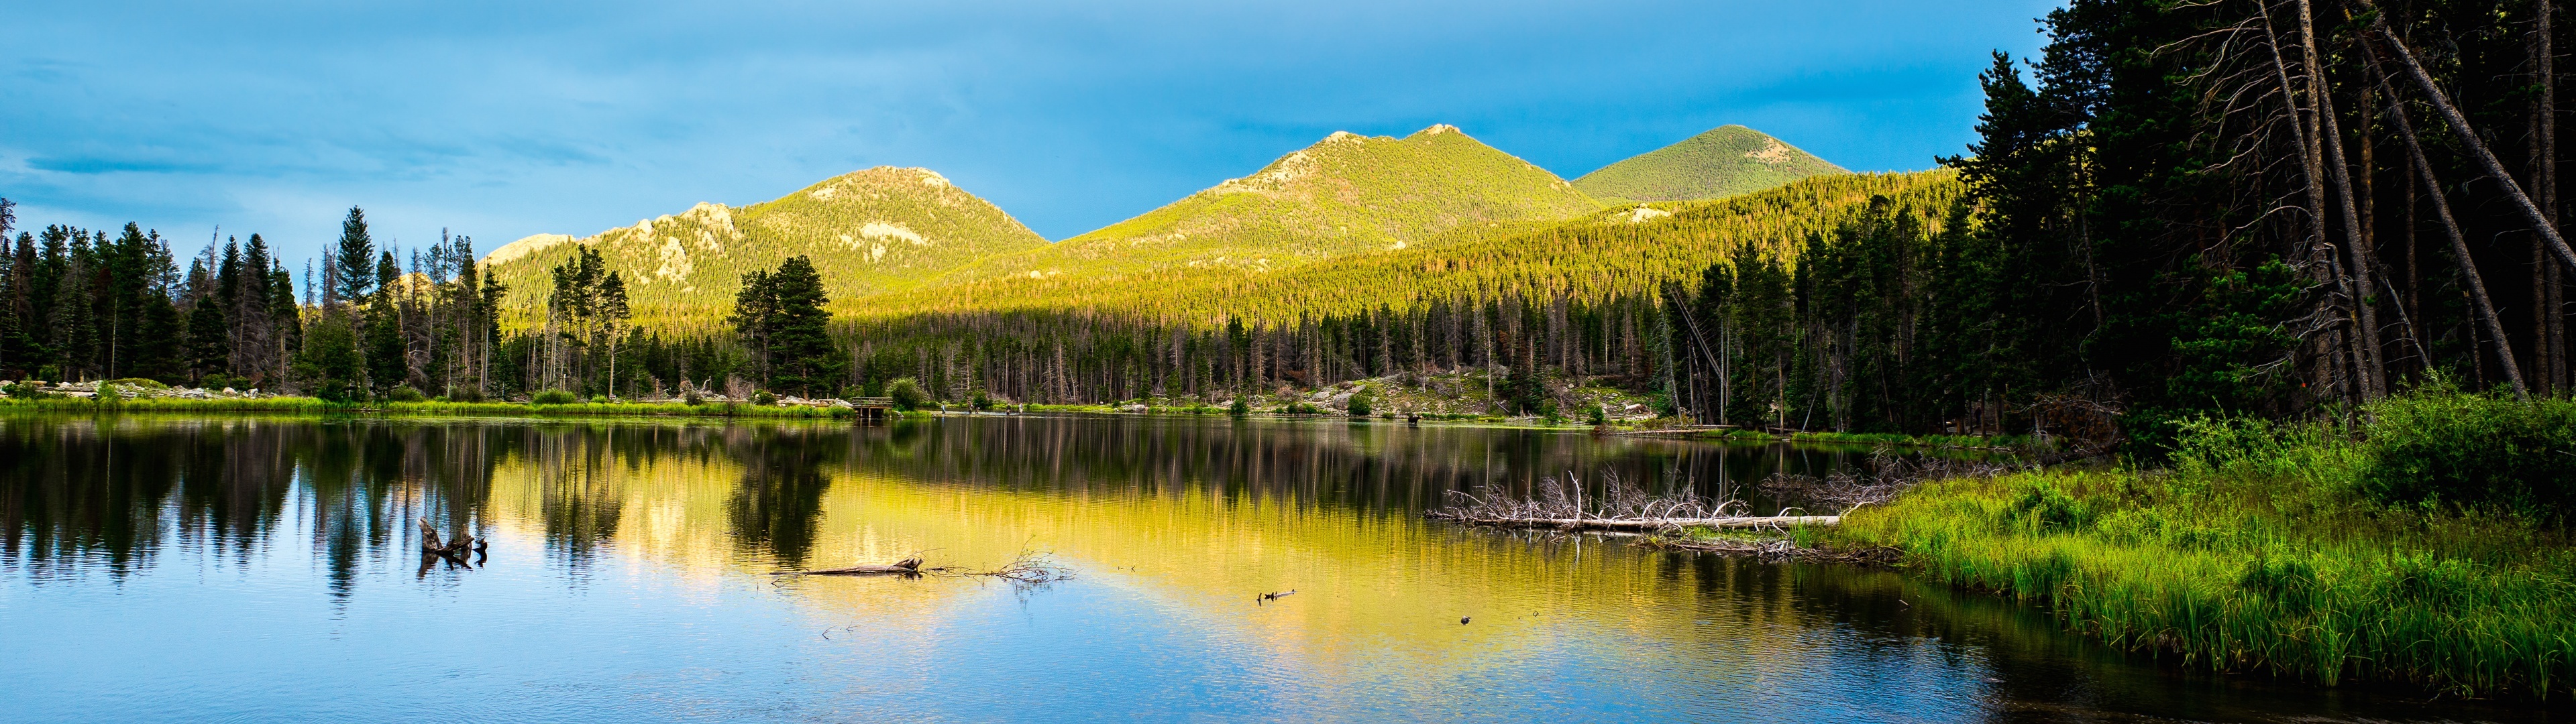 Sprague Lake wallpaper, Rocky Mountain Park, Colorado nature, 4K landscape, 3840x1080 Dual Screen Desktop